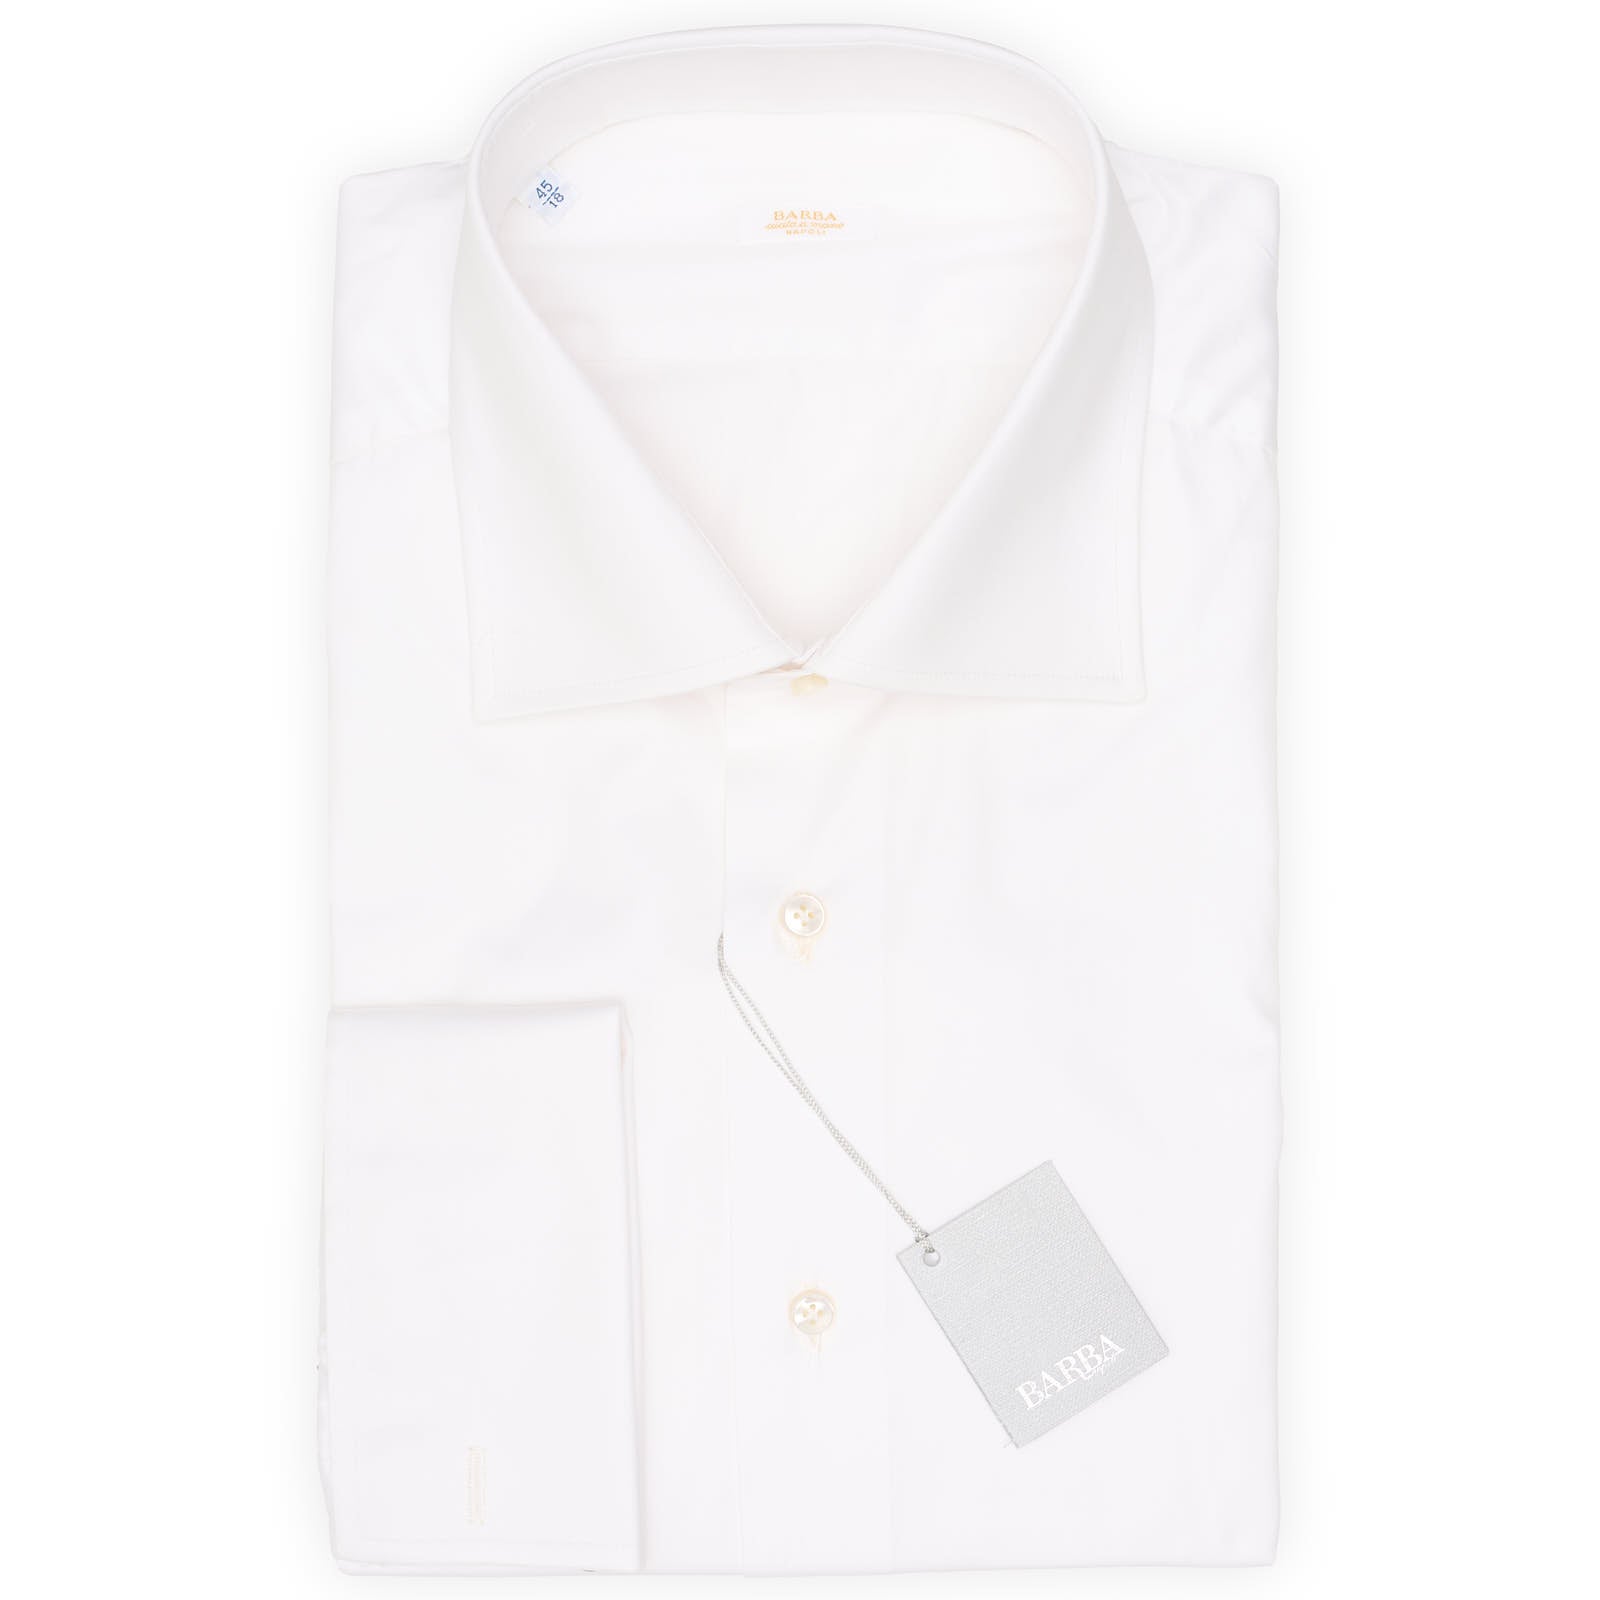 BARBA Napoli Handmade White Twill Cotton French Cuff Dress Shirt EU 45 NEW US 18